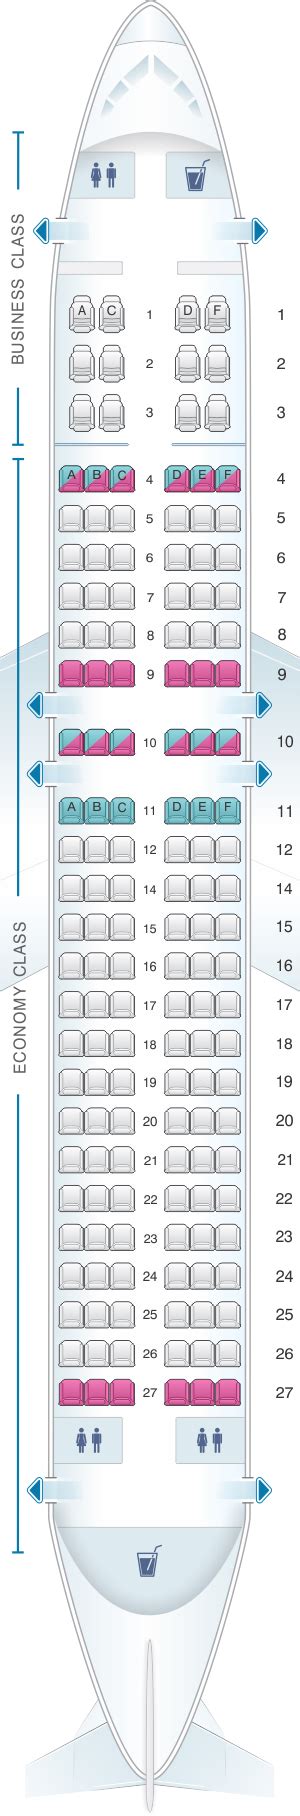 Etihad Airbus A320 Seating Chart